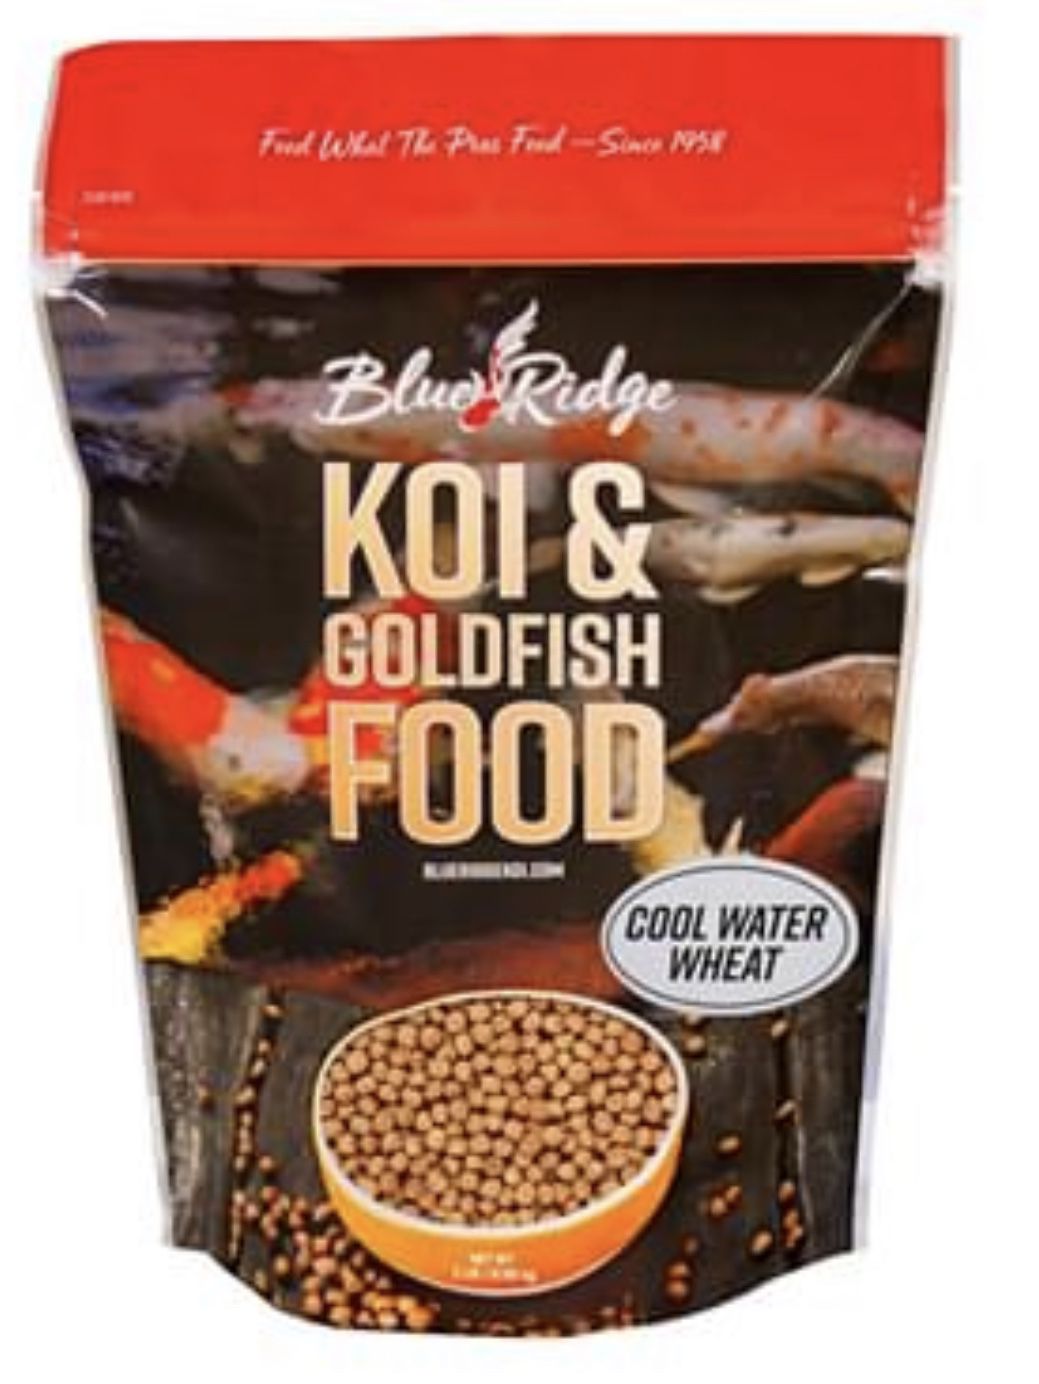 COOL WATER WHEAT, Koi & Goldfish fish food by Ridge, Pond tank